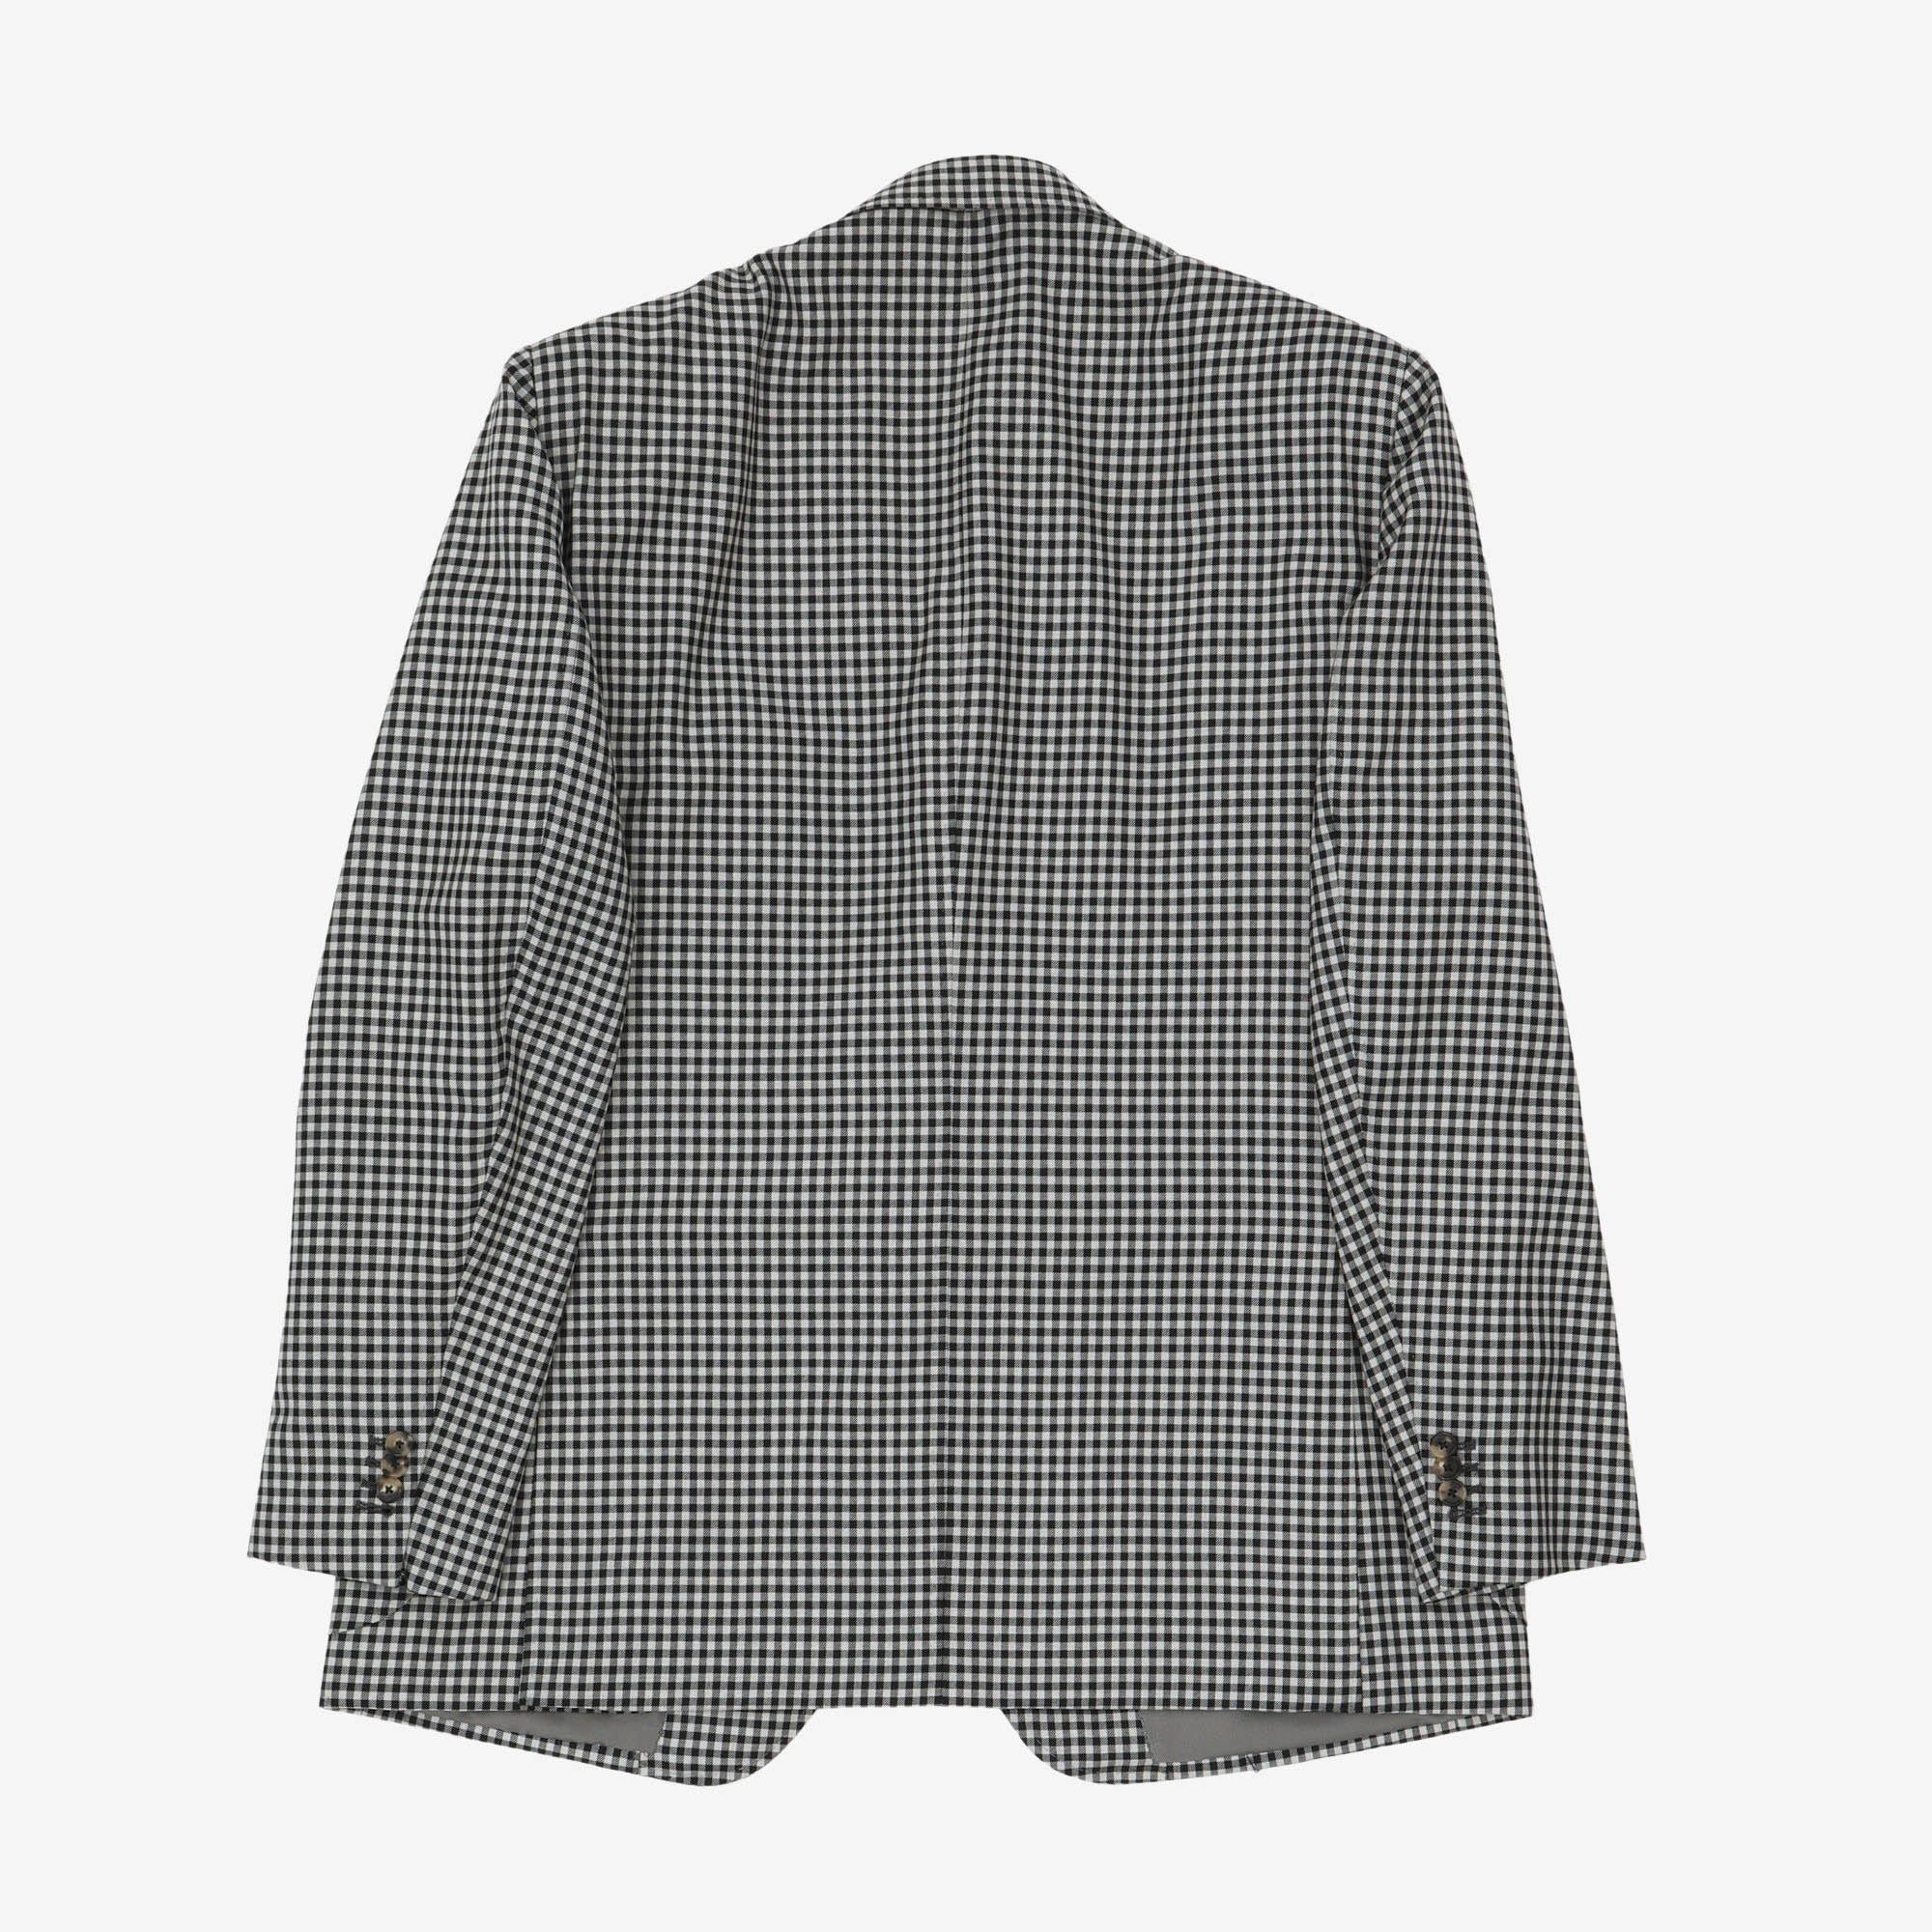 Wool Check Blazer (Fits UK 44/46)